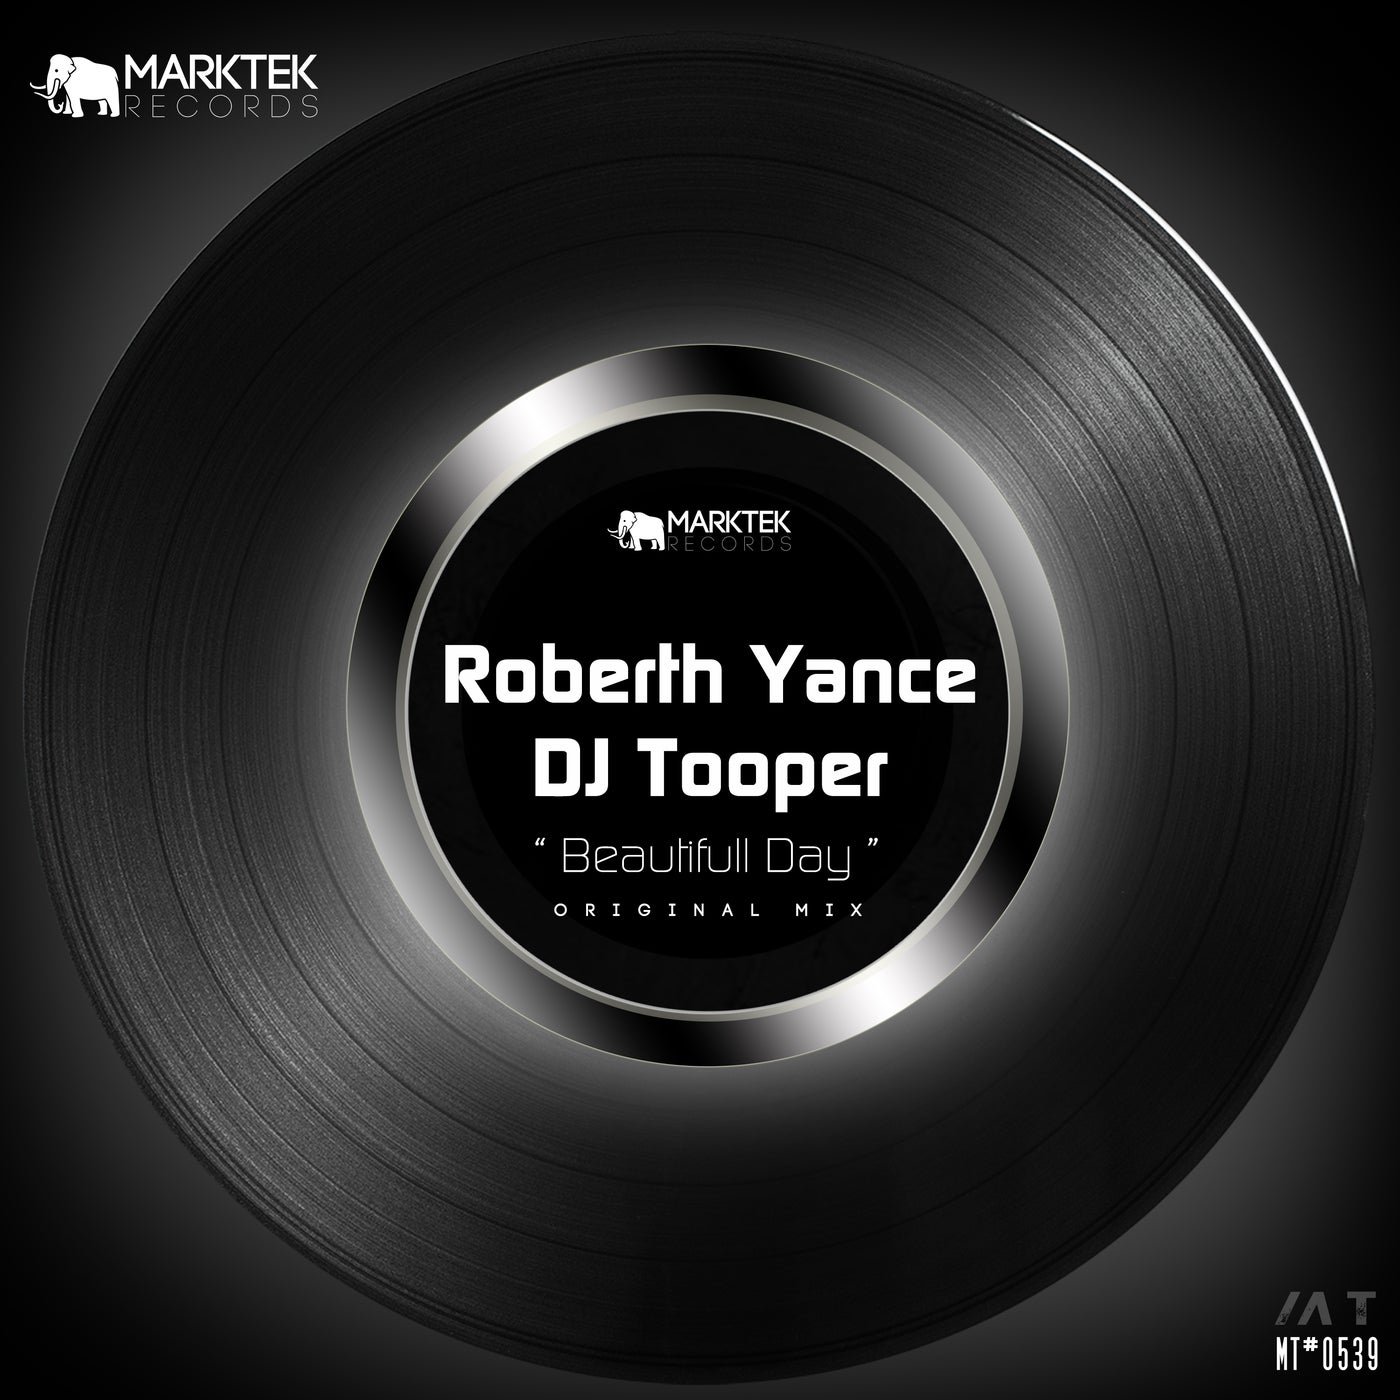 Roberth Yance & DJ Tooper - Beautifull Day [Marktek Records]